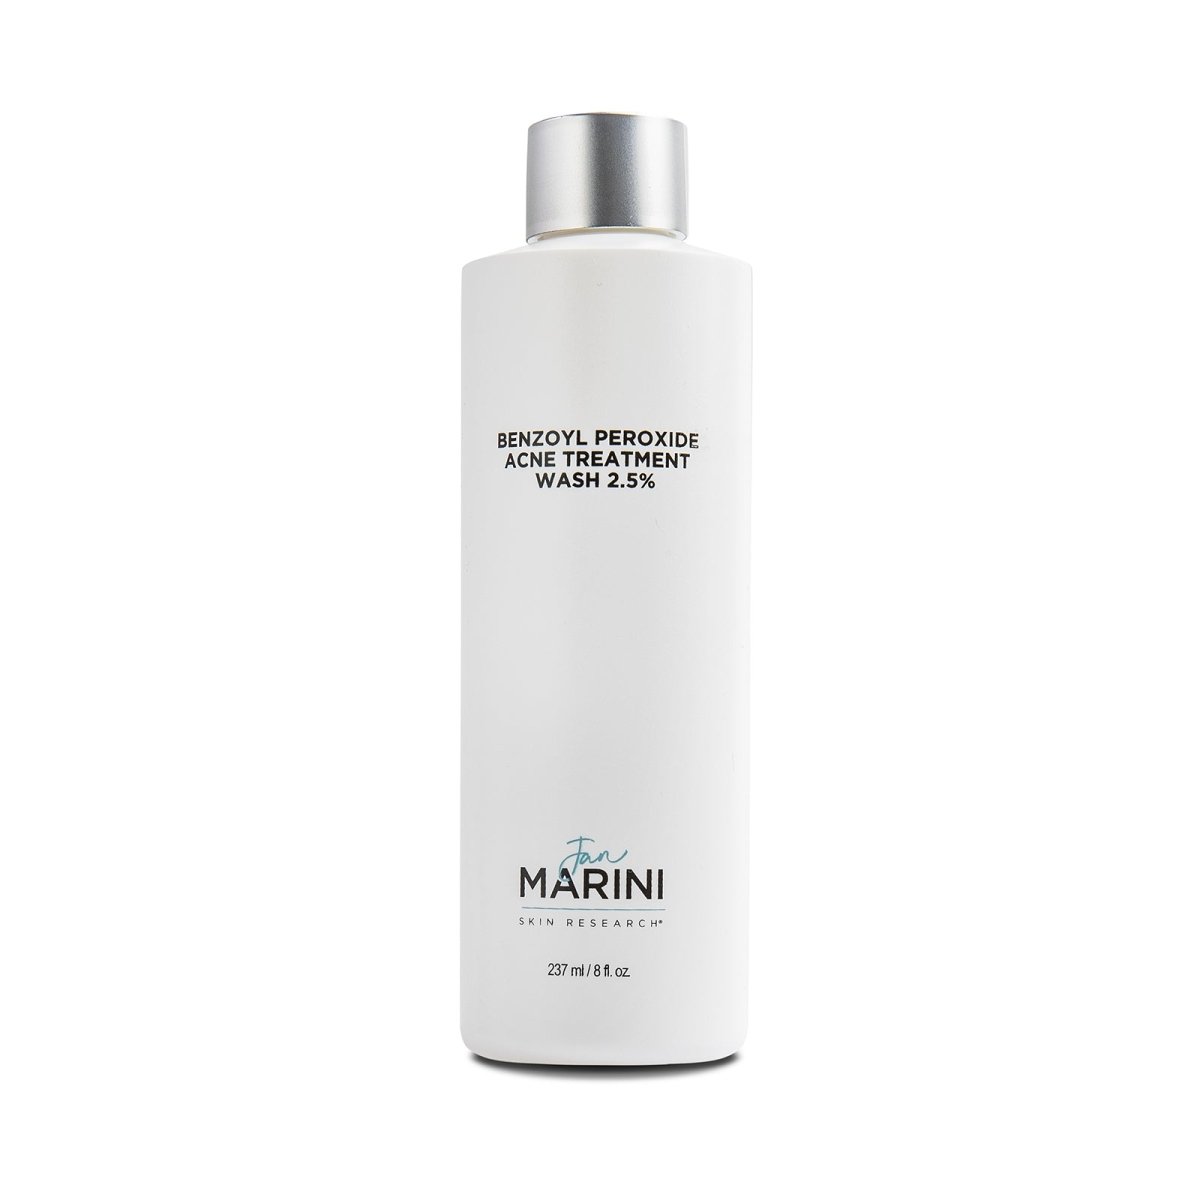 Jan Marini Benzoyl Peroxide Acne Treatment Wash 2.5% - SkincareEssentials